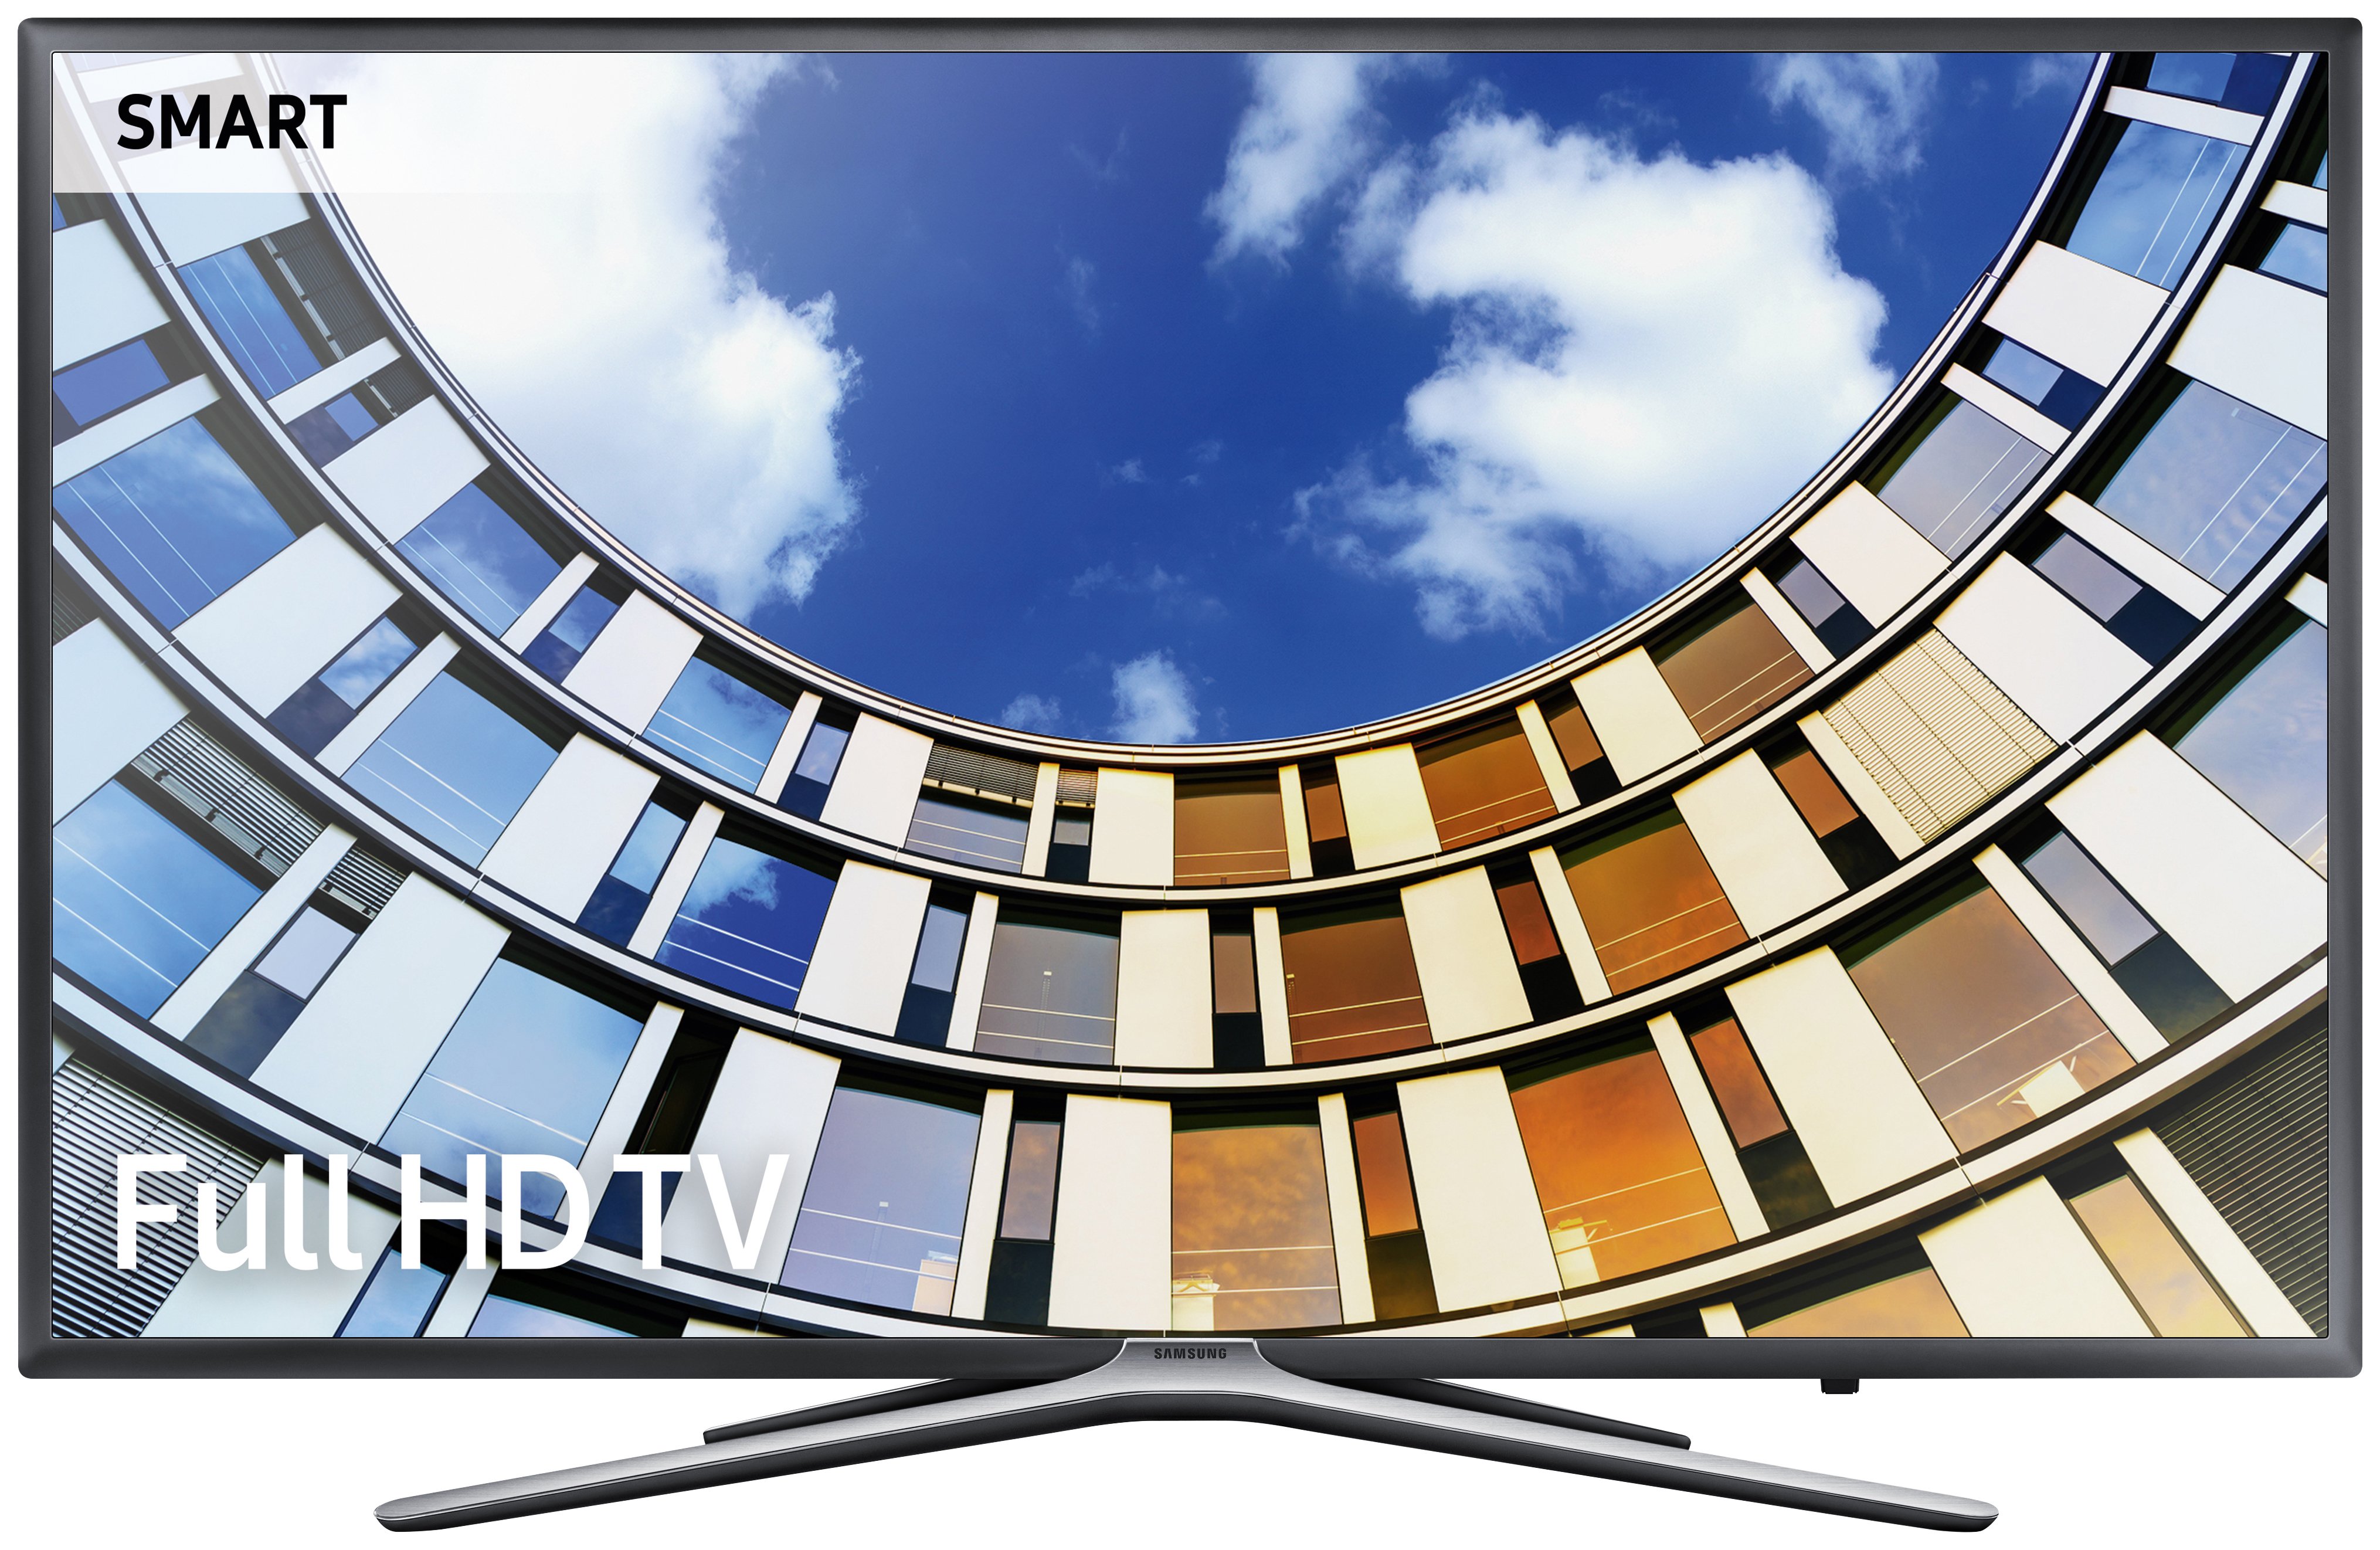 Samsung 32M5520 32 Inch 1080p Full HD Smart TV